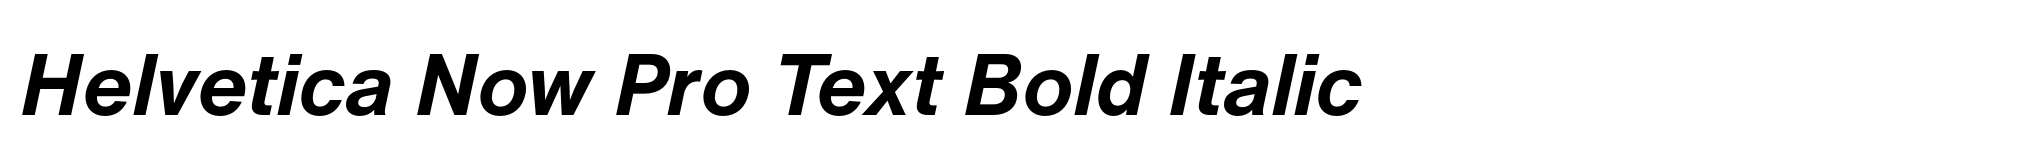 Helvetica Now Pro Text Bold Italic image